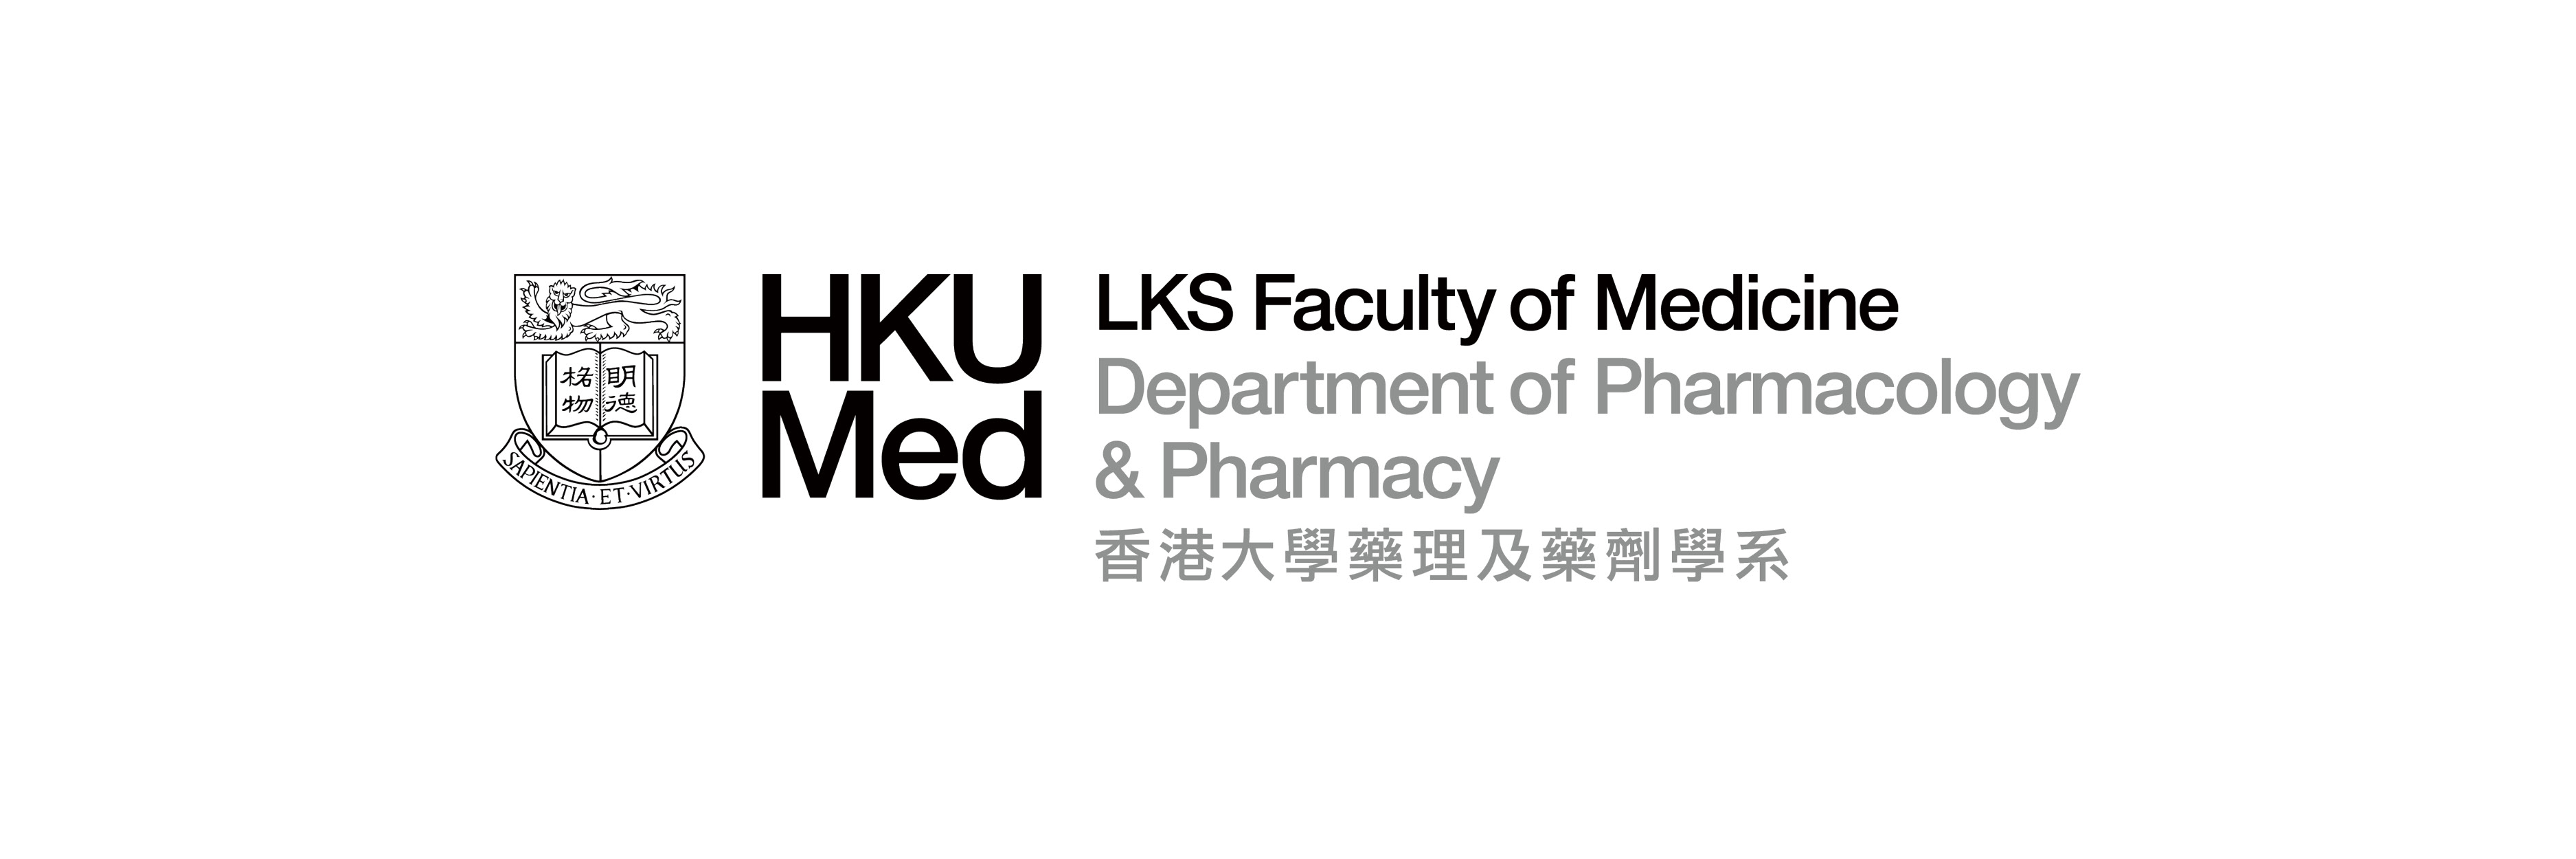 Logo of HKU Pharmacy.